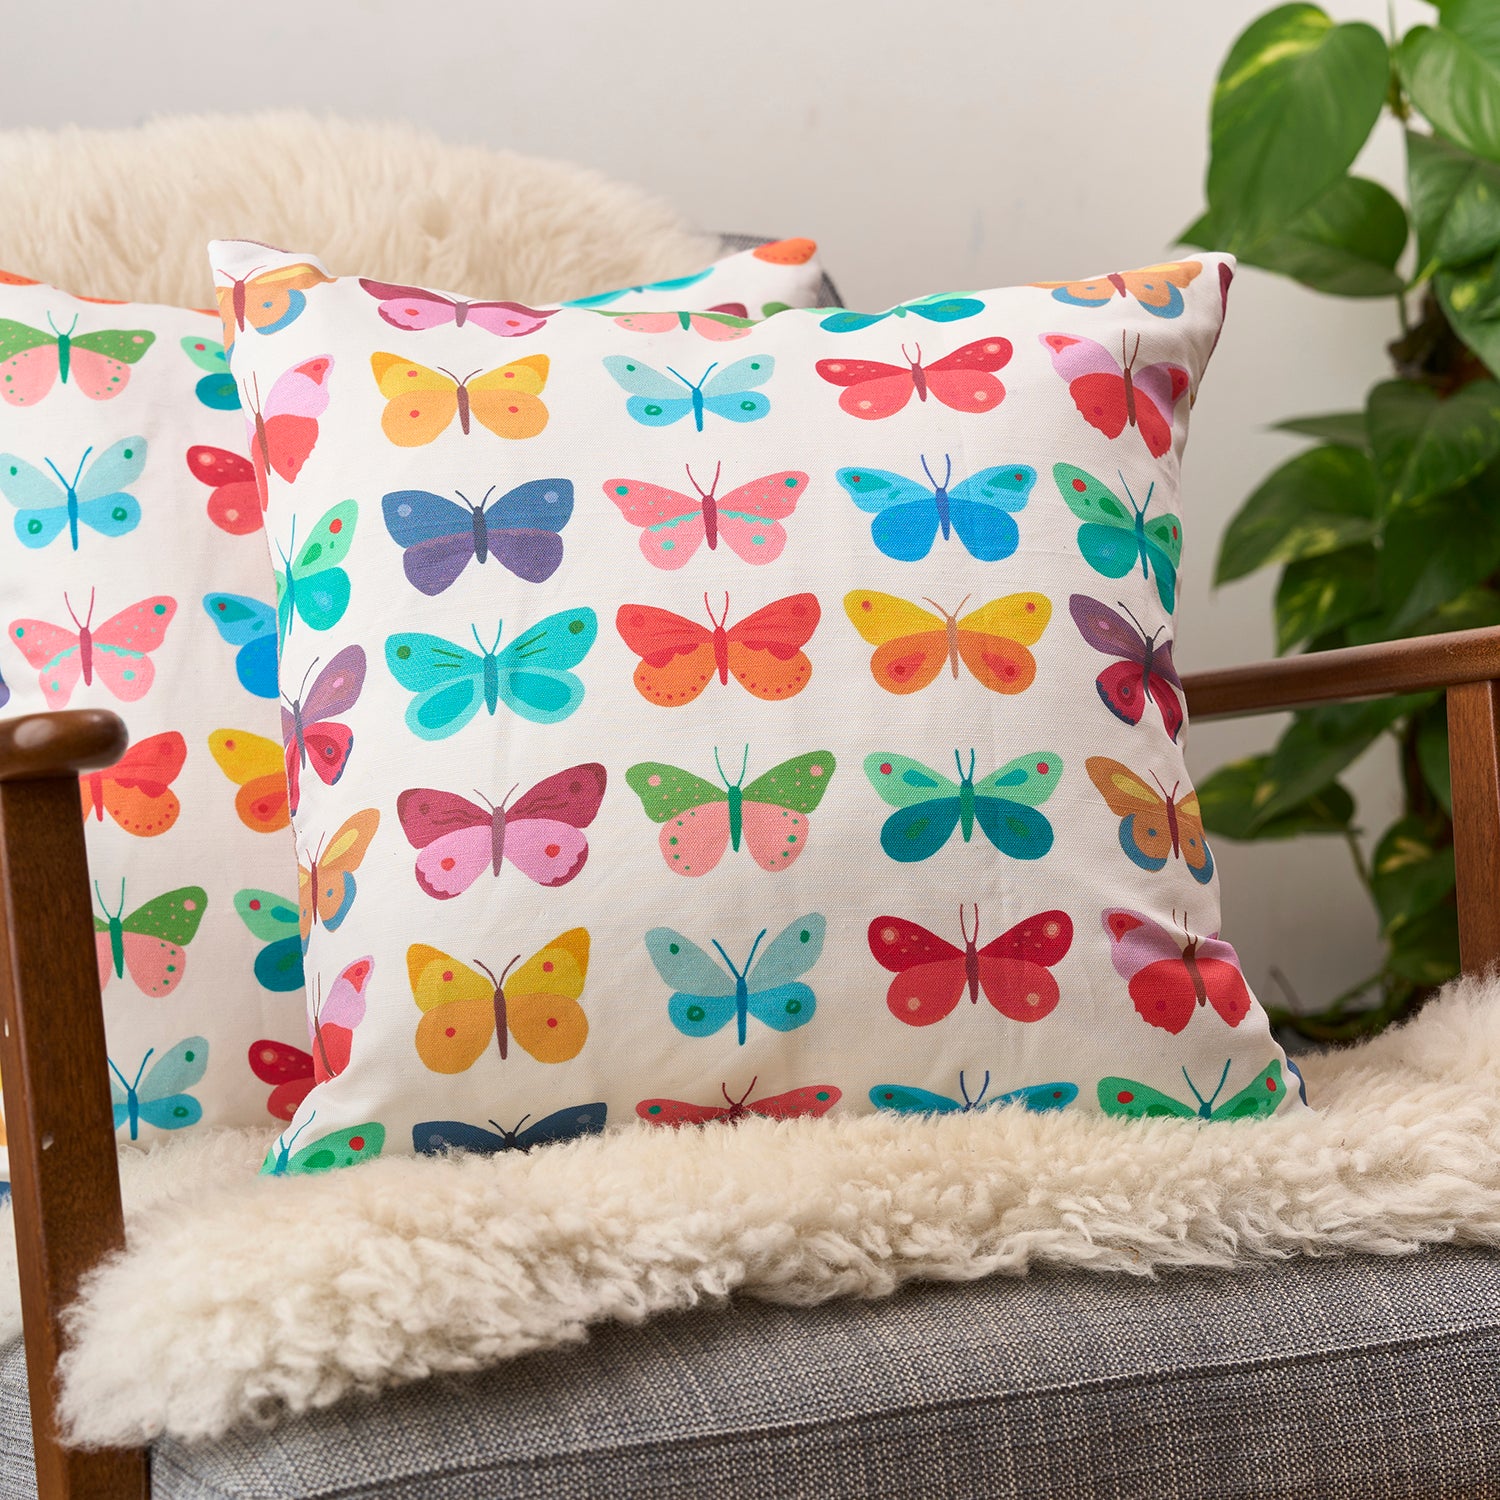 Butterfly Cushion by Mary Kilvert